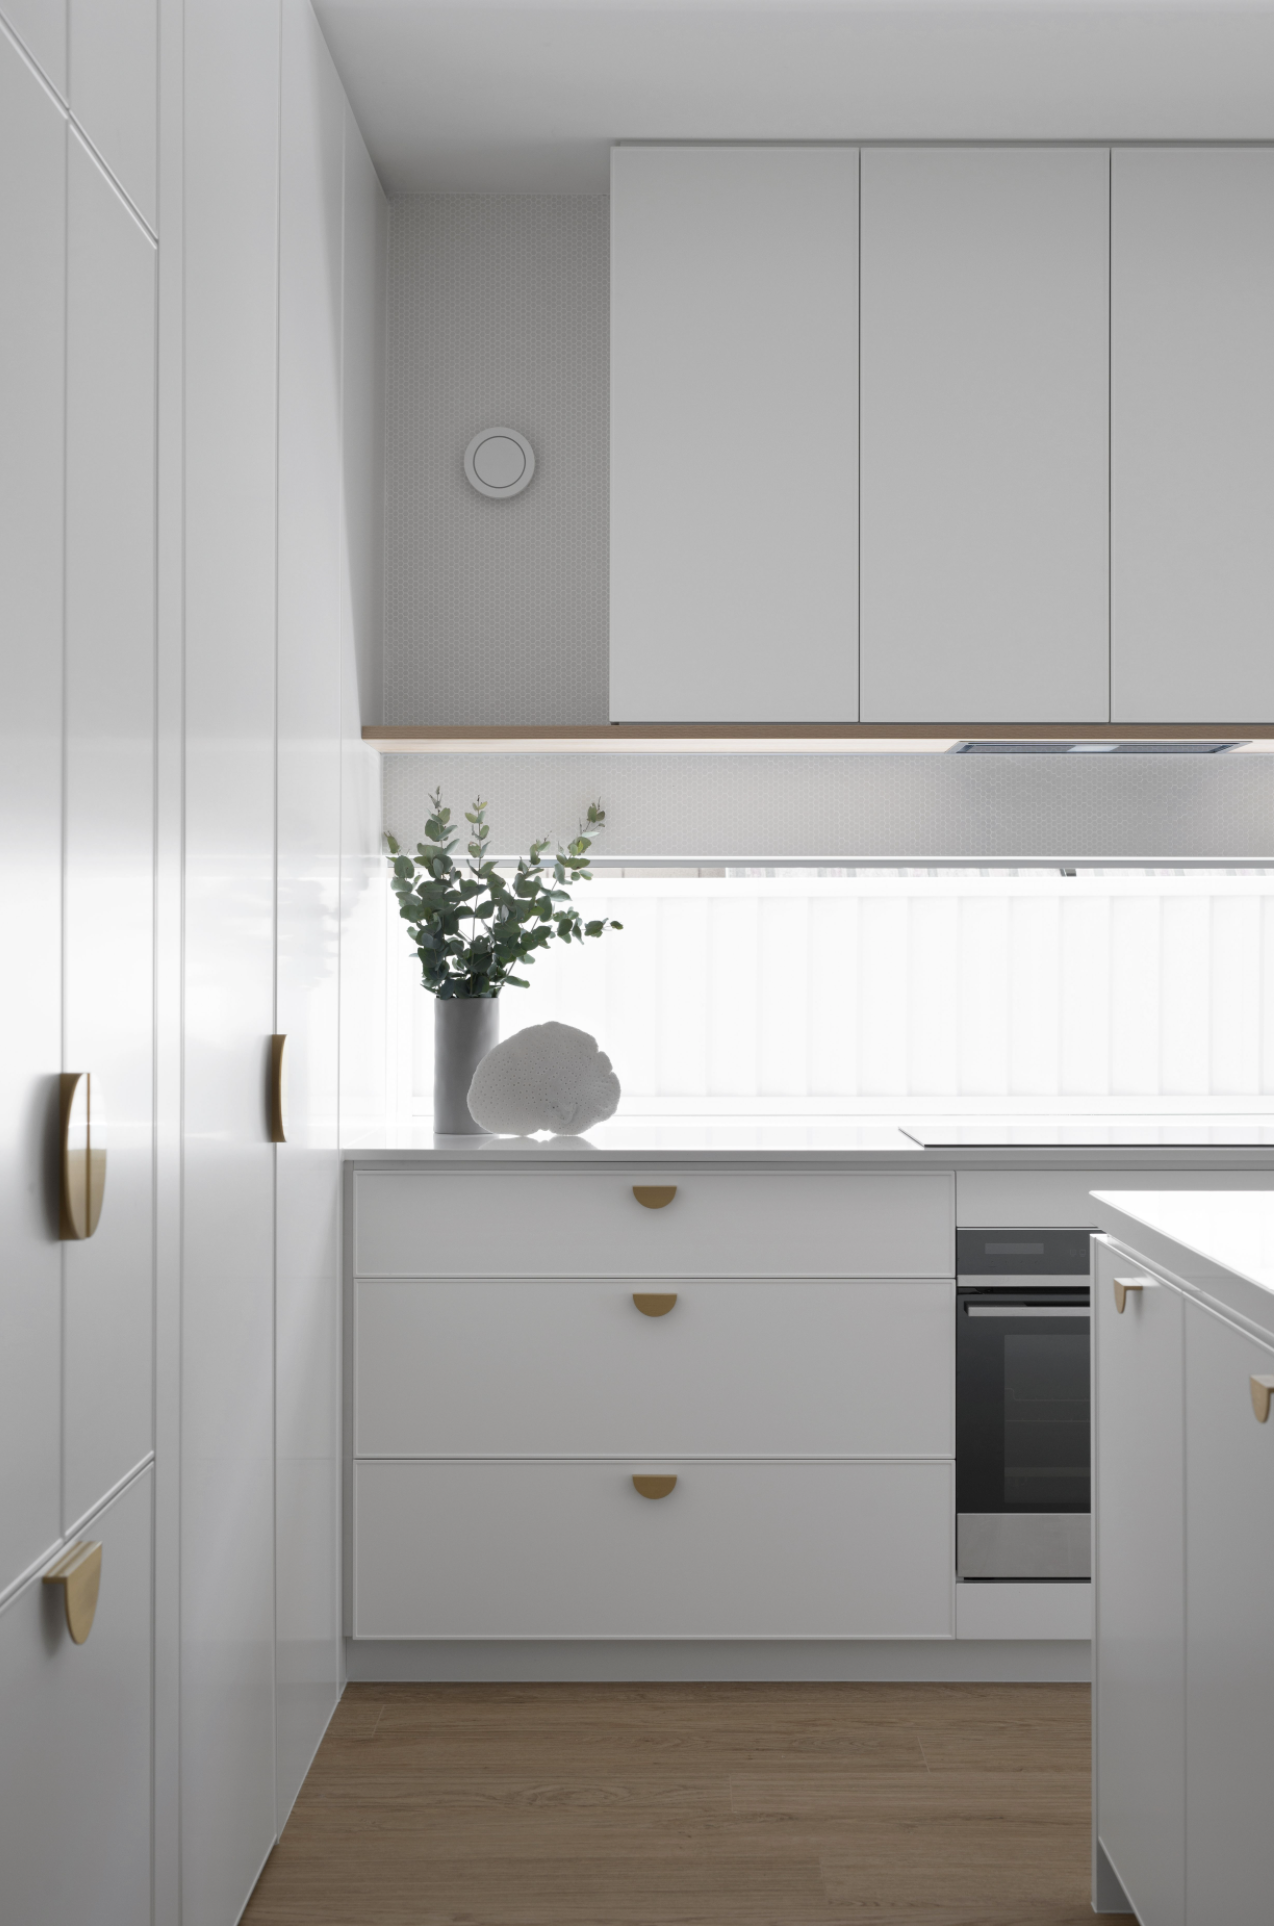 Choosing kitchen cupboard handle confirm
your good taste